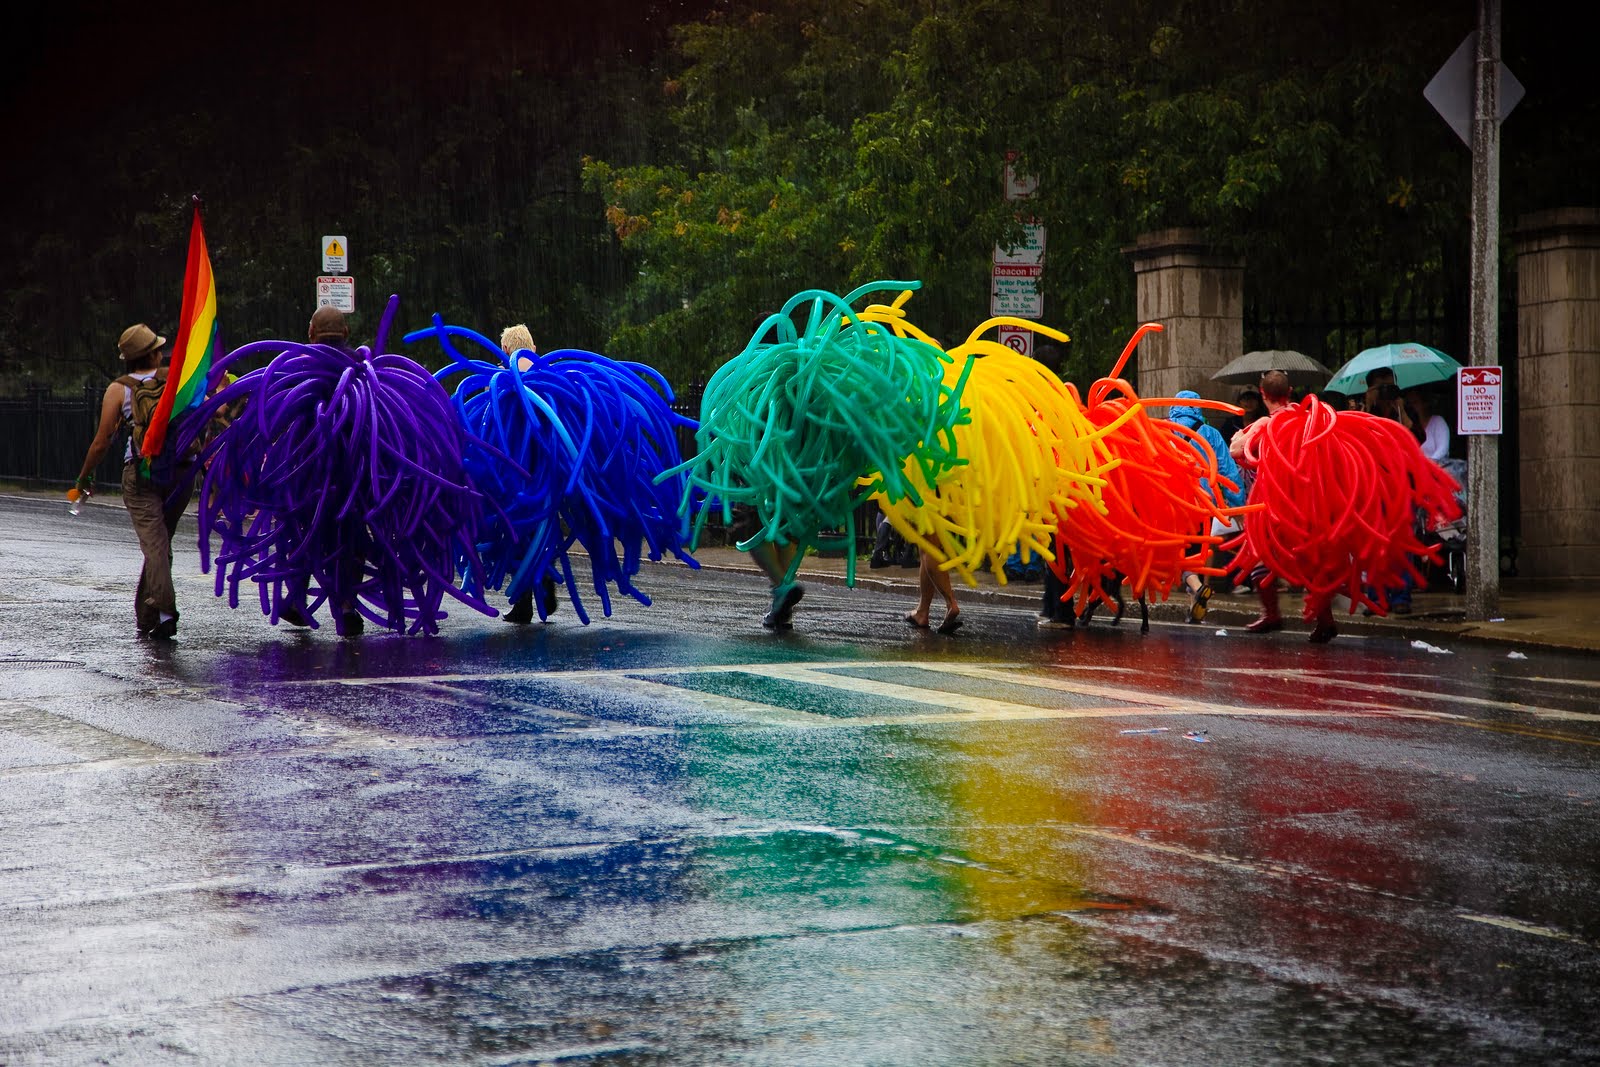 Boston's Gay Pride parade was so colorful and fun! 